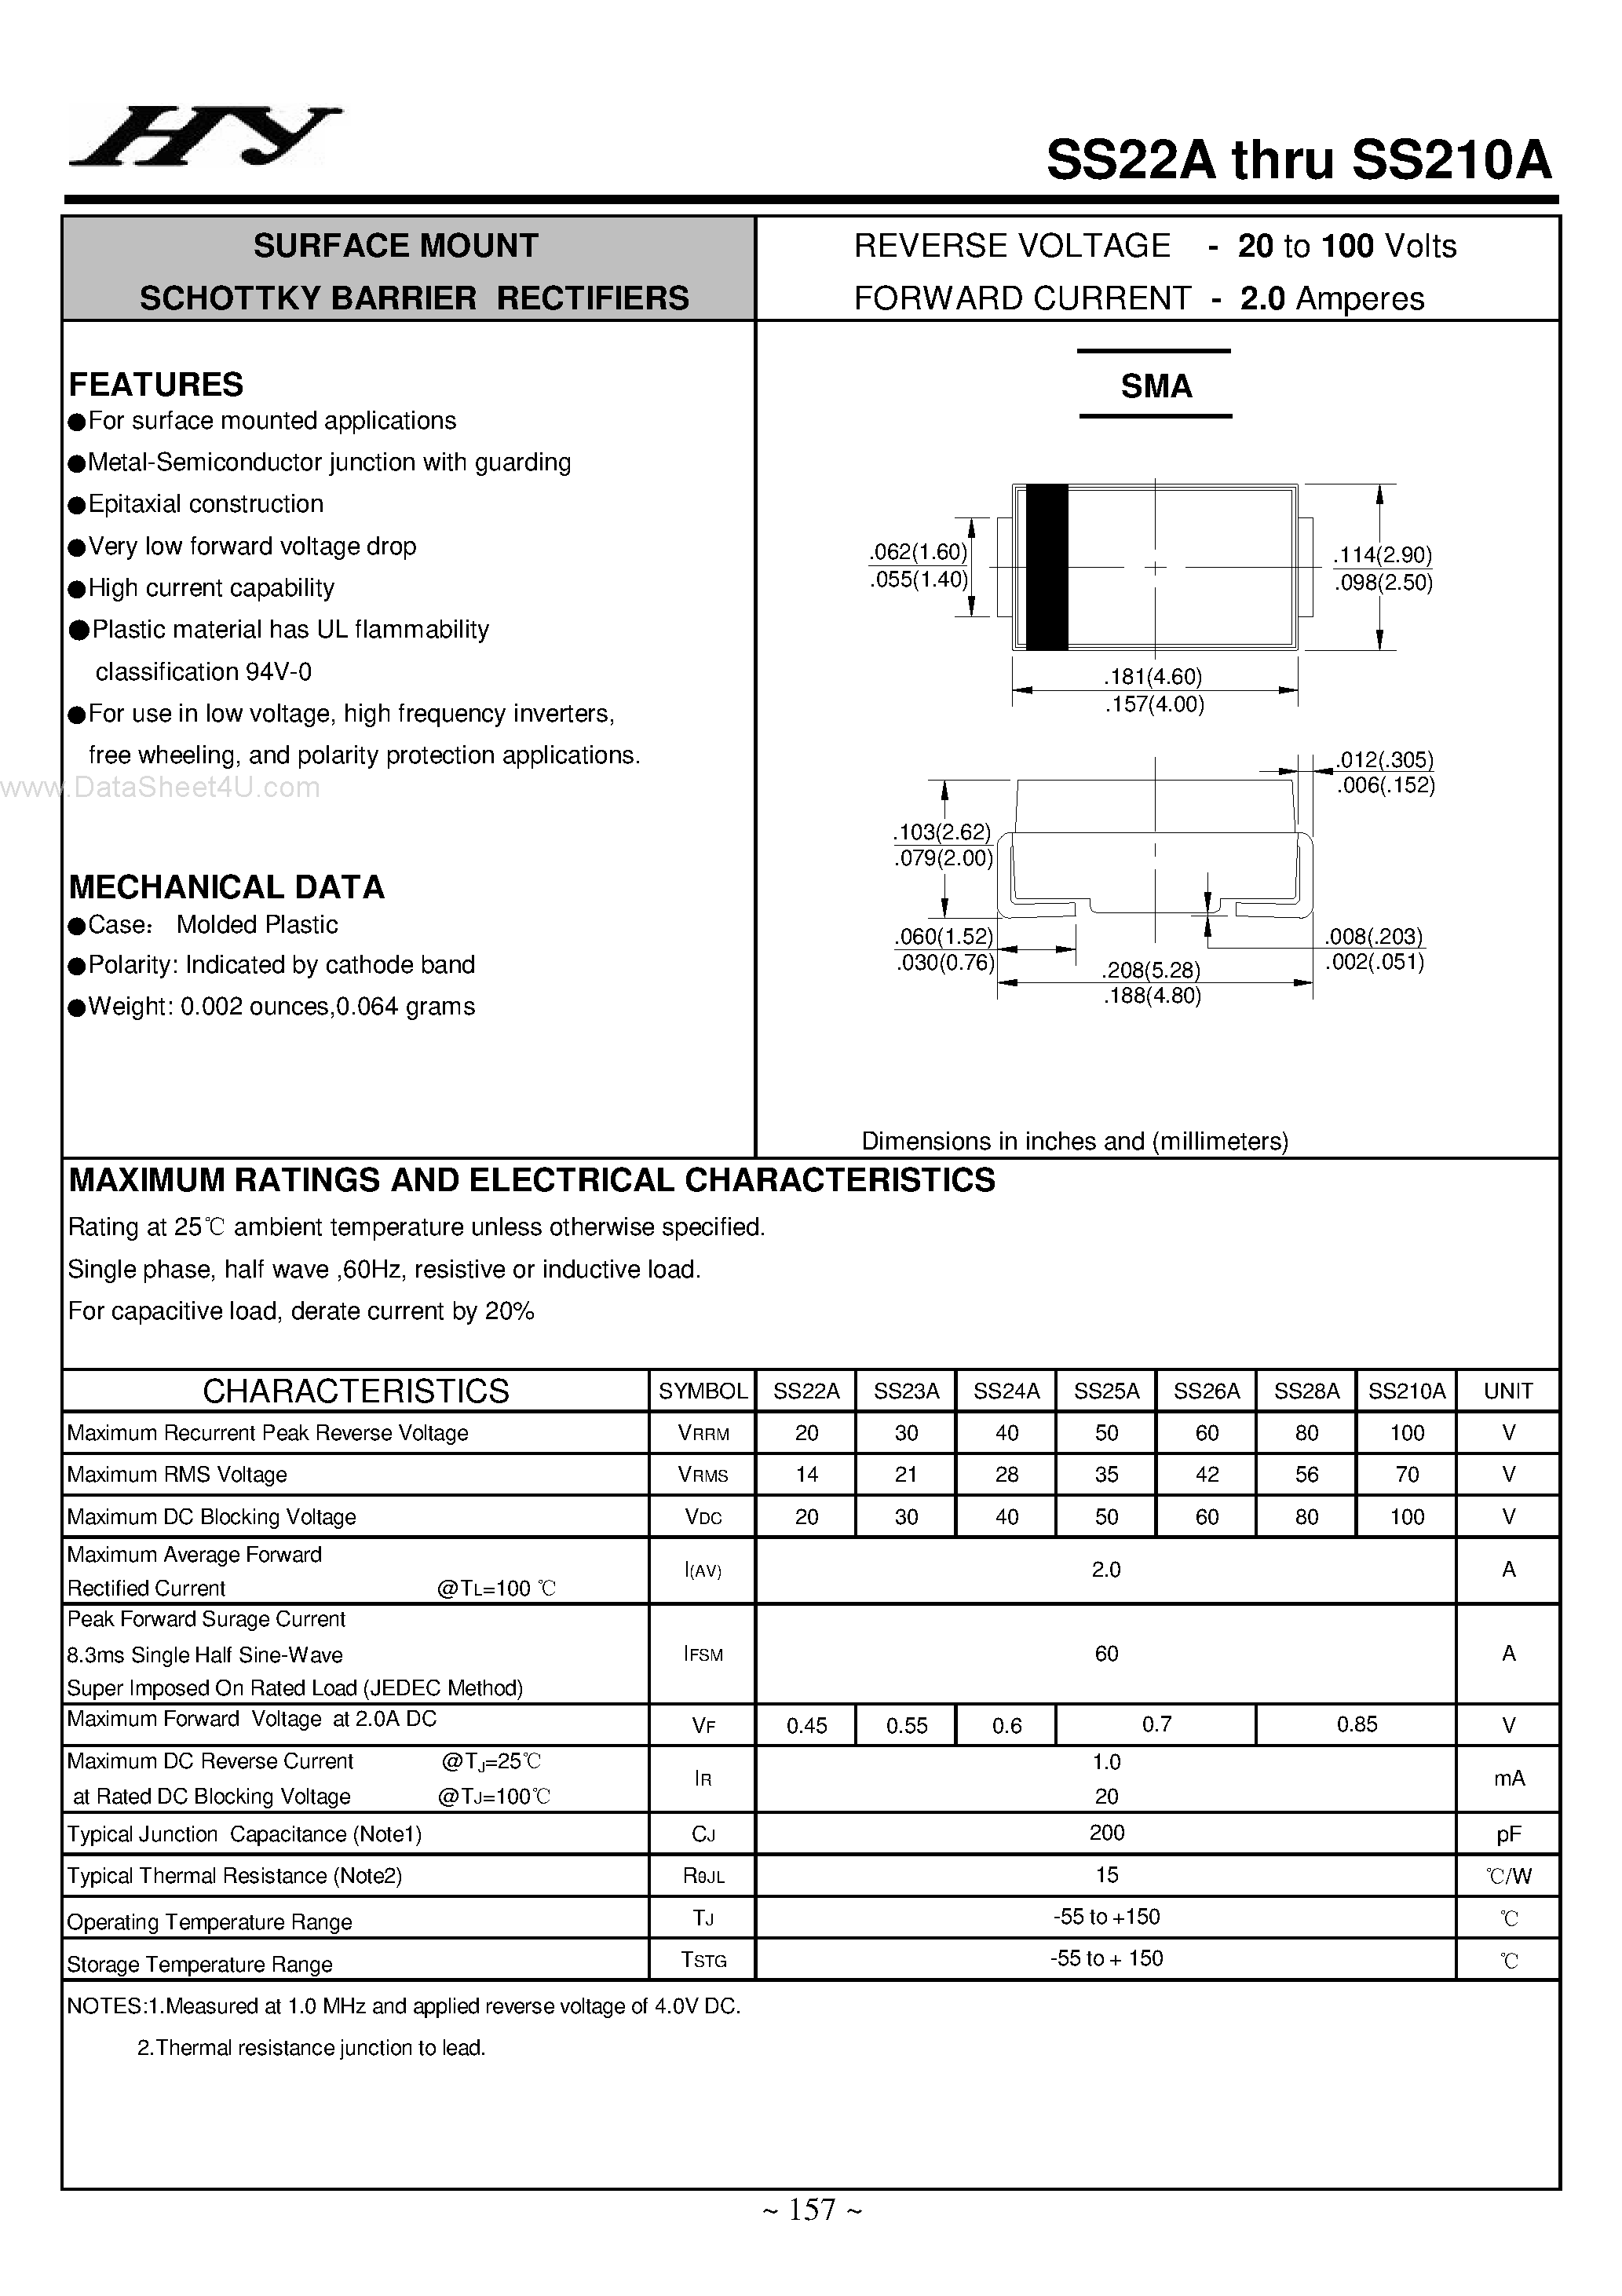 Datasheet SS210A - (SS22A - SS210A) SURFACE MOUNT SCHOTTKY BARRIER RECTIFIERS page 1